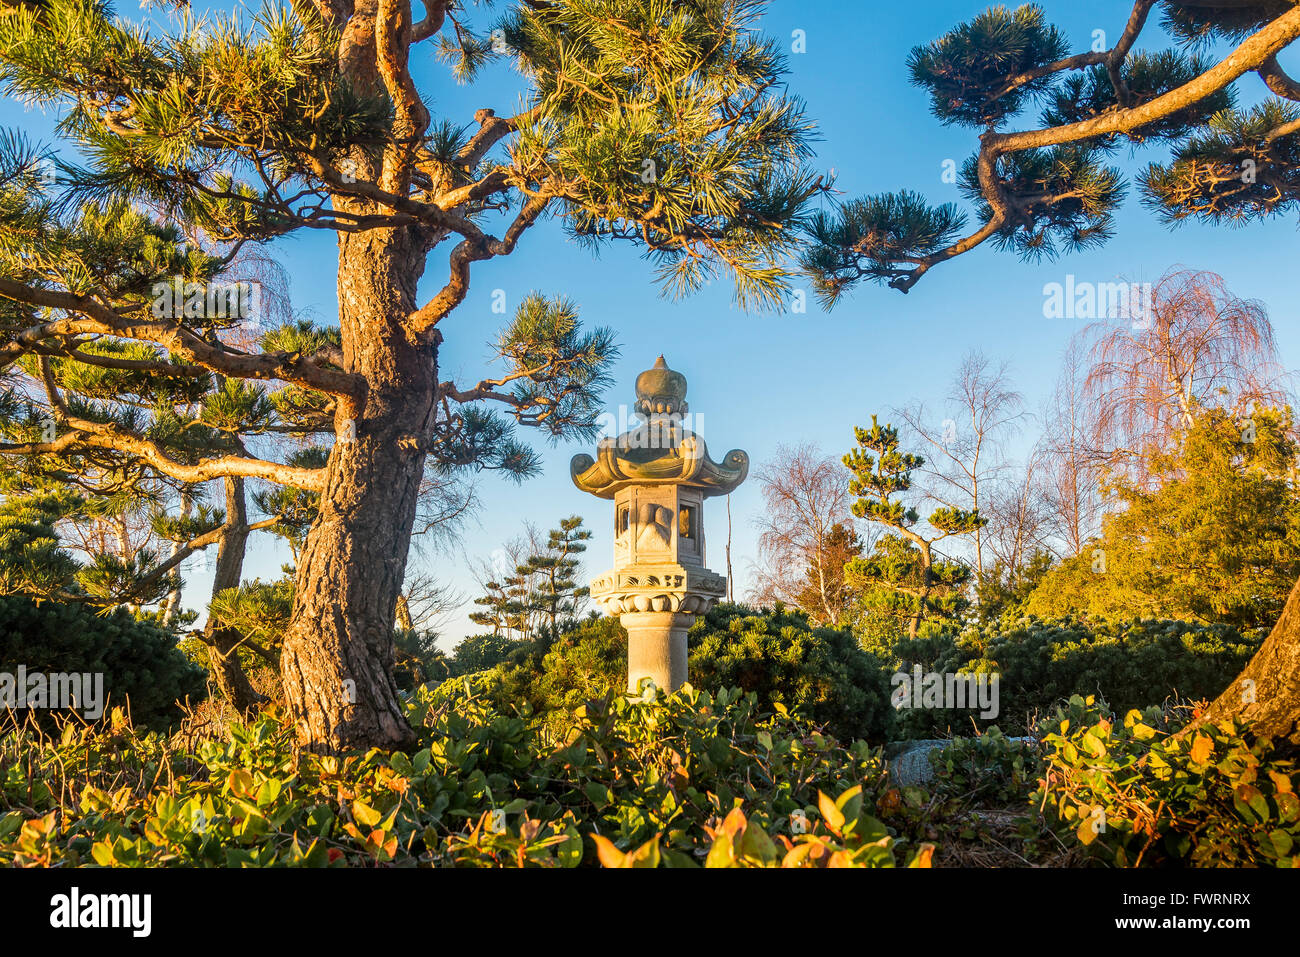 Shore pine and Japanese stone lantern, Stock Photo